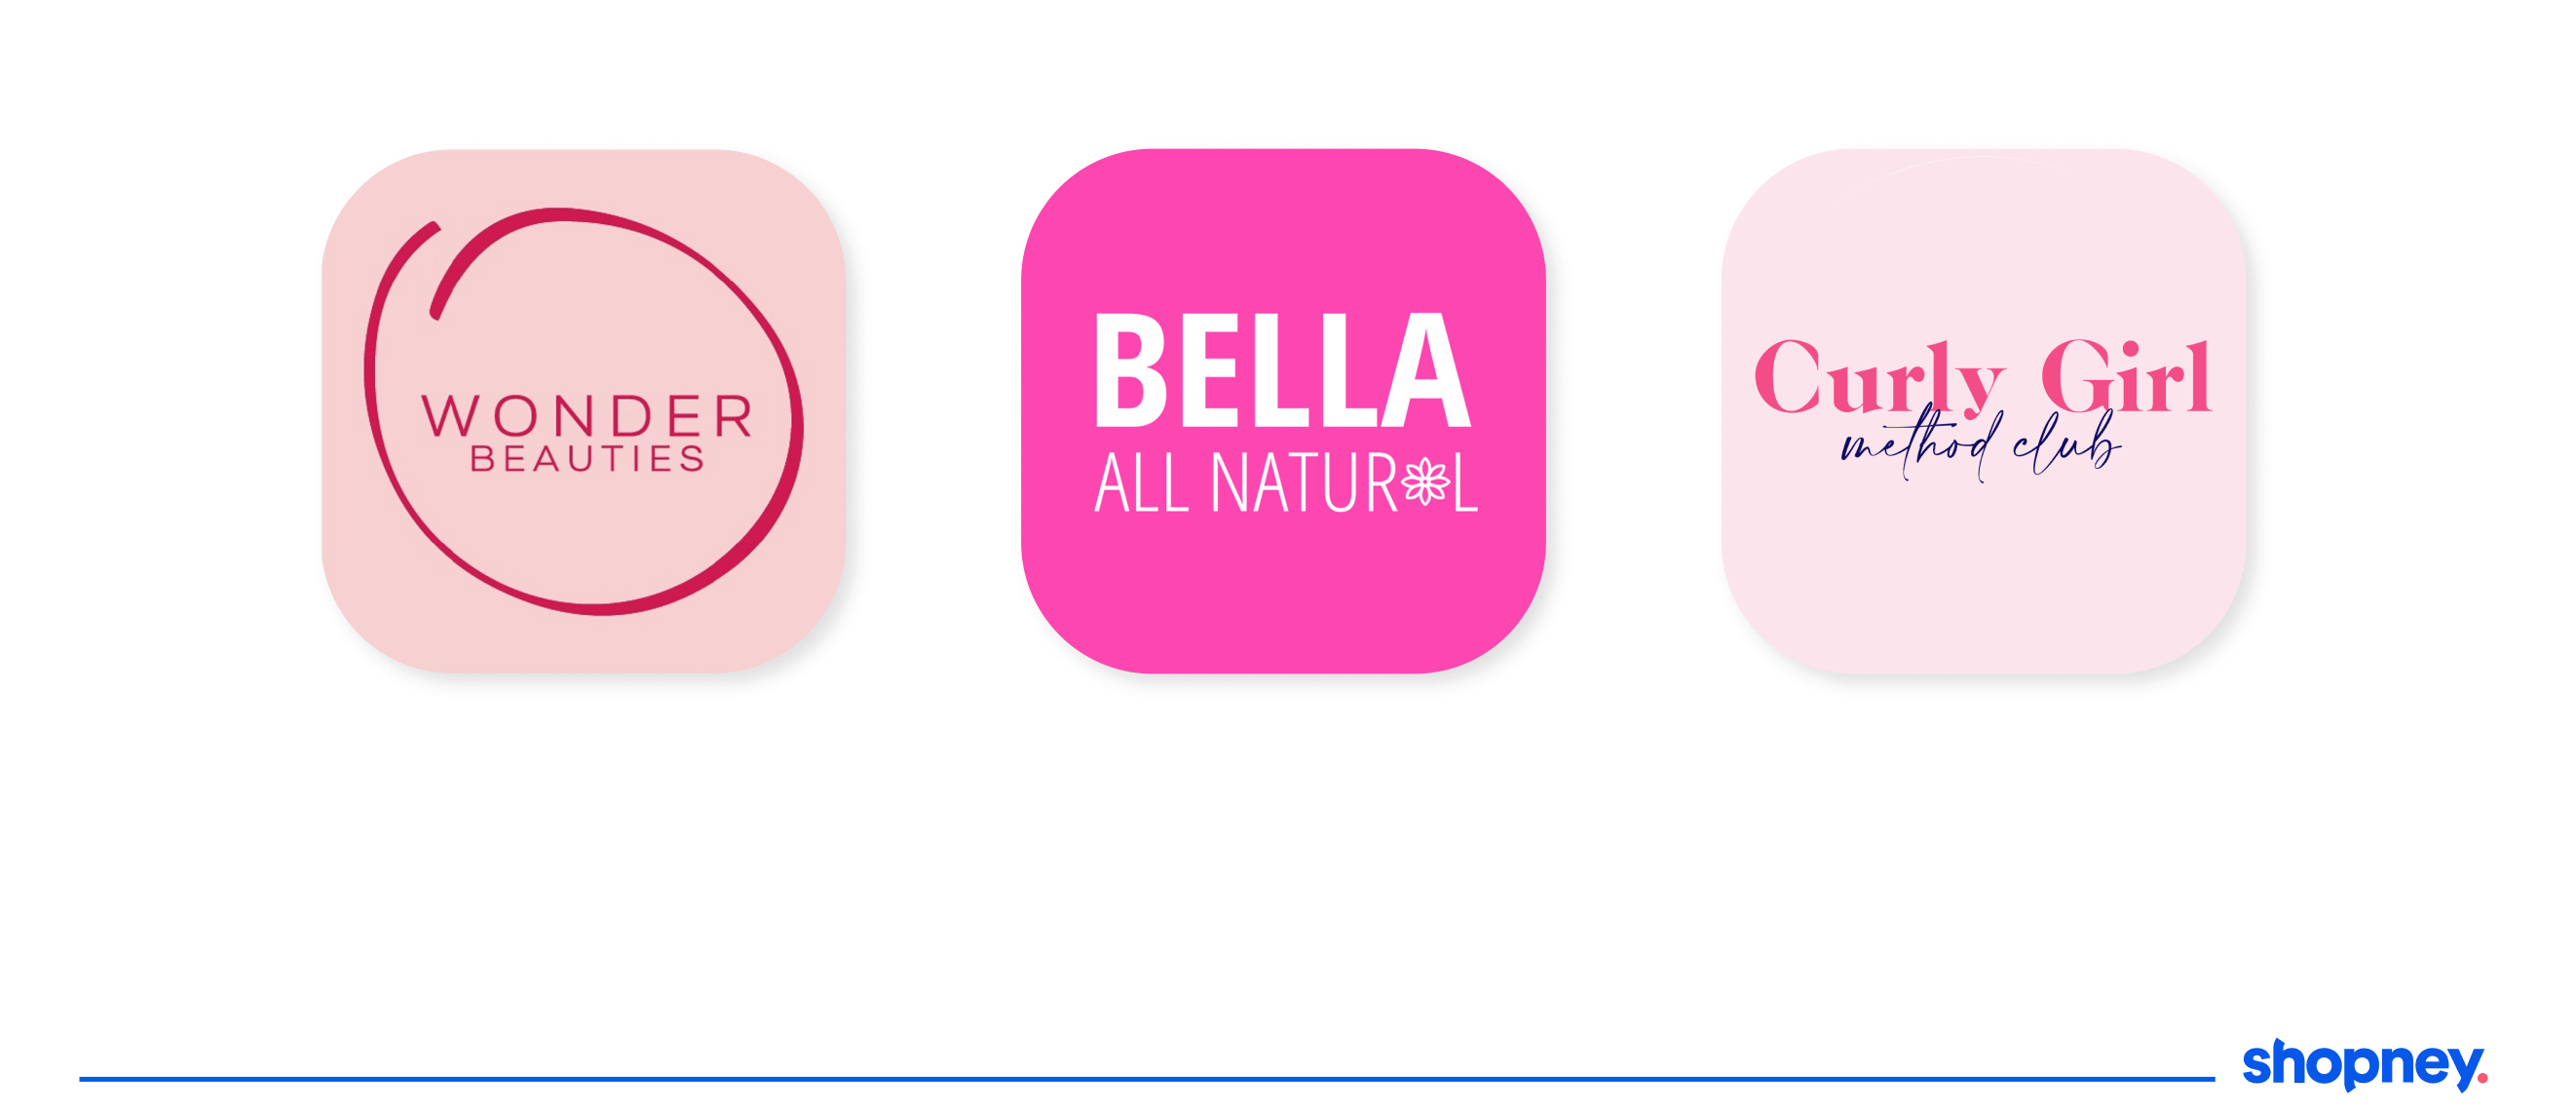 beauty & cosmetics brands' mobile app logos